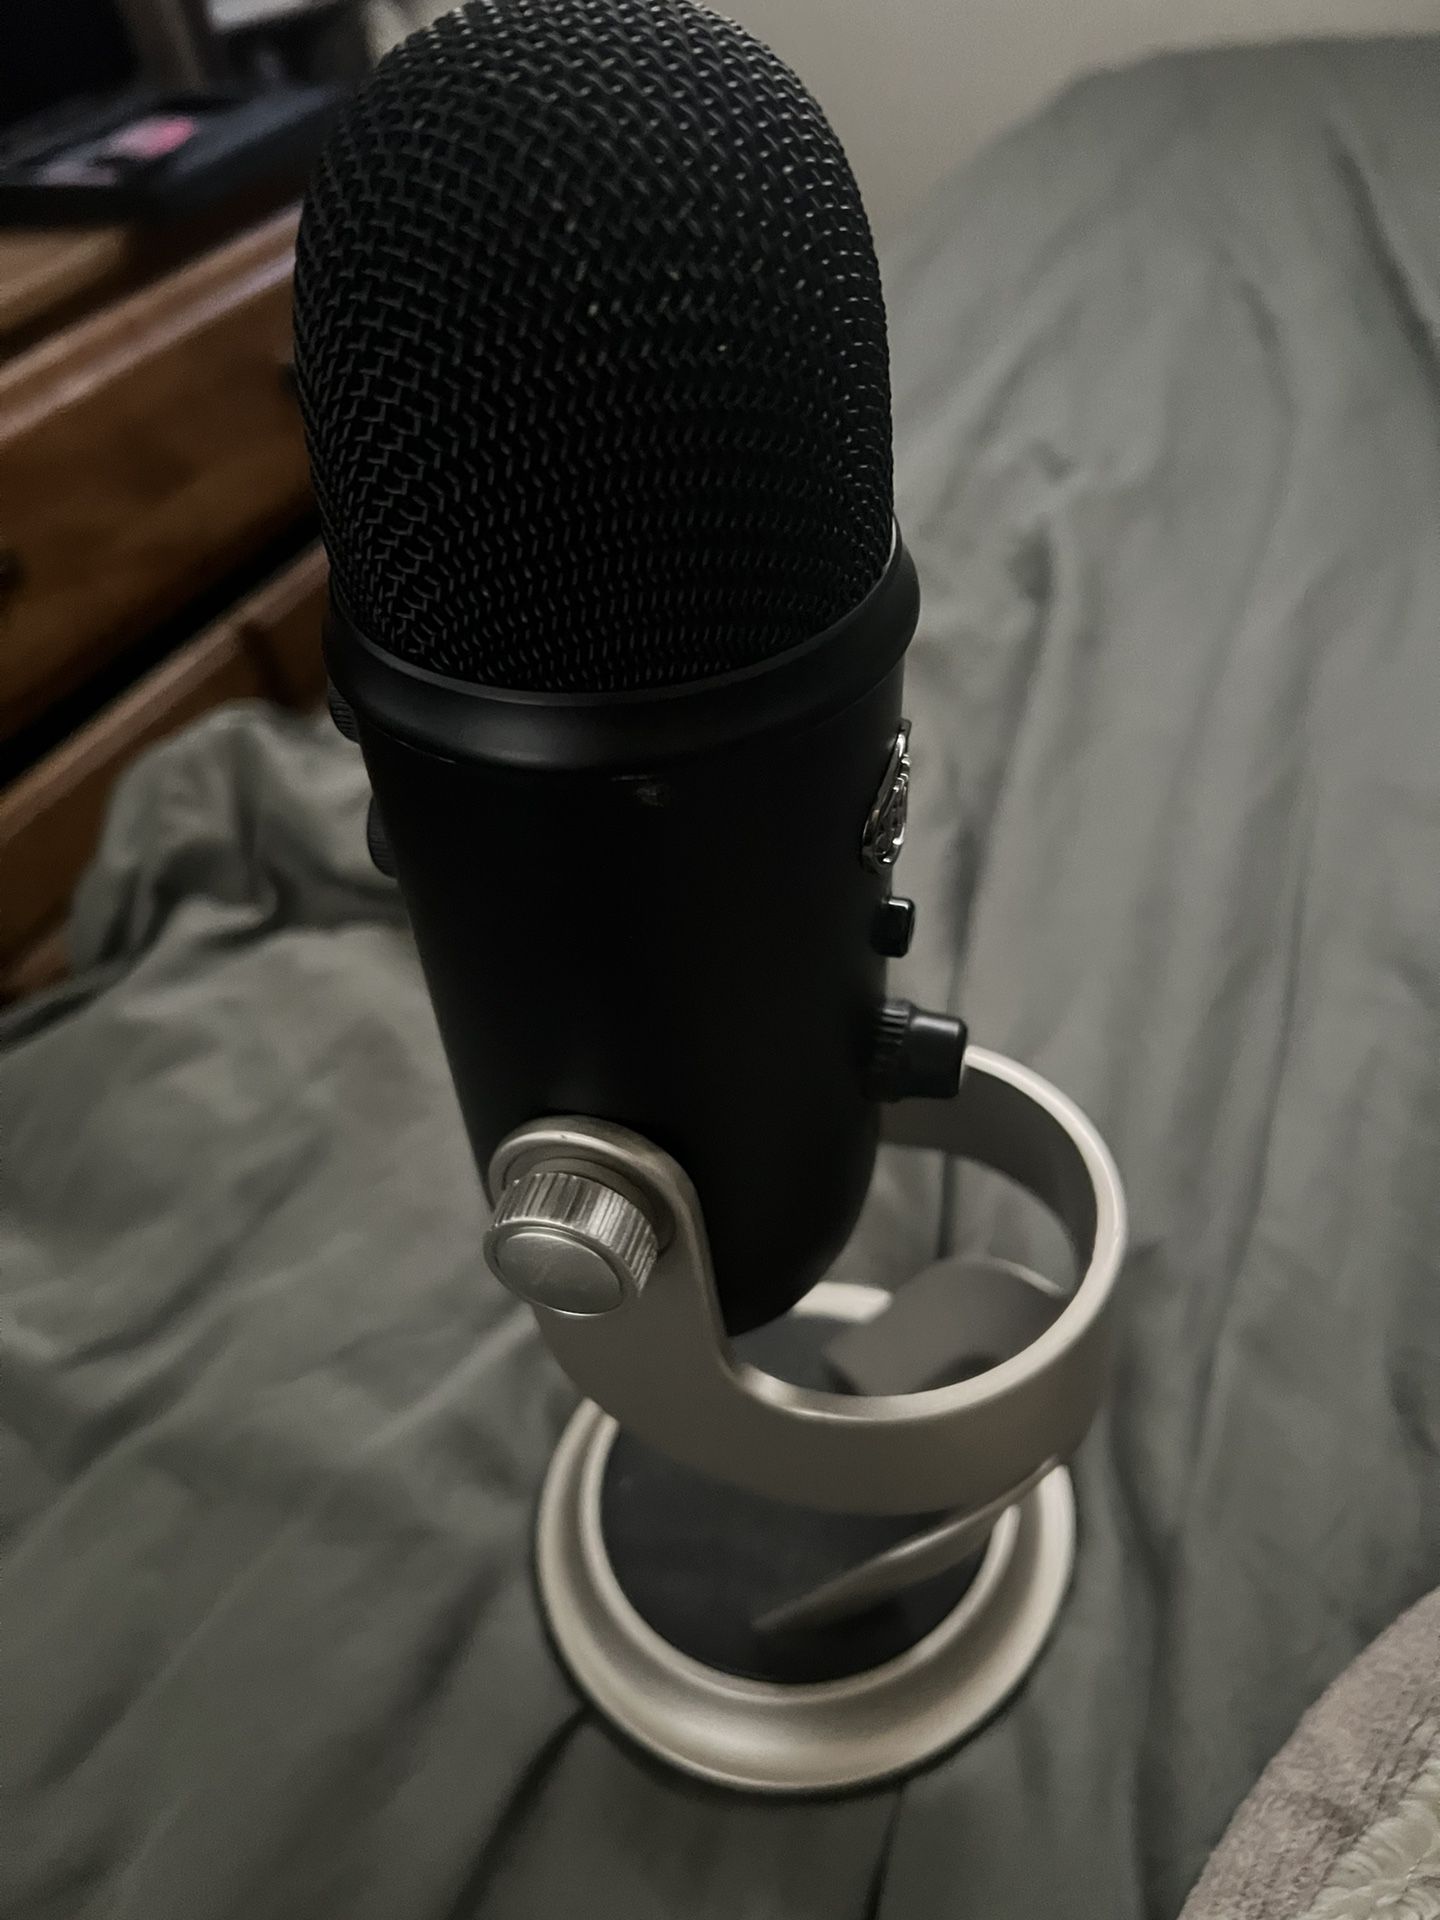 Blue Yeti pro Microphone 